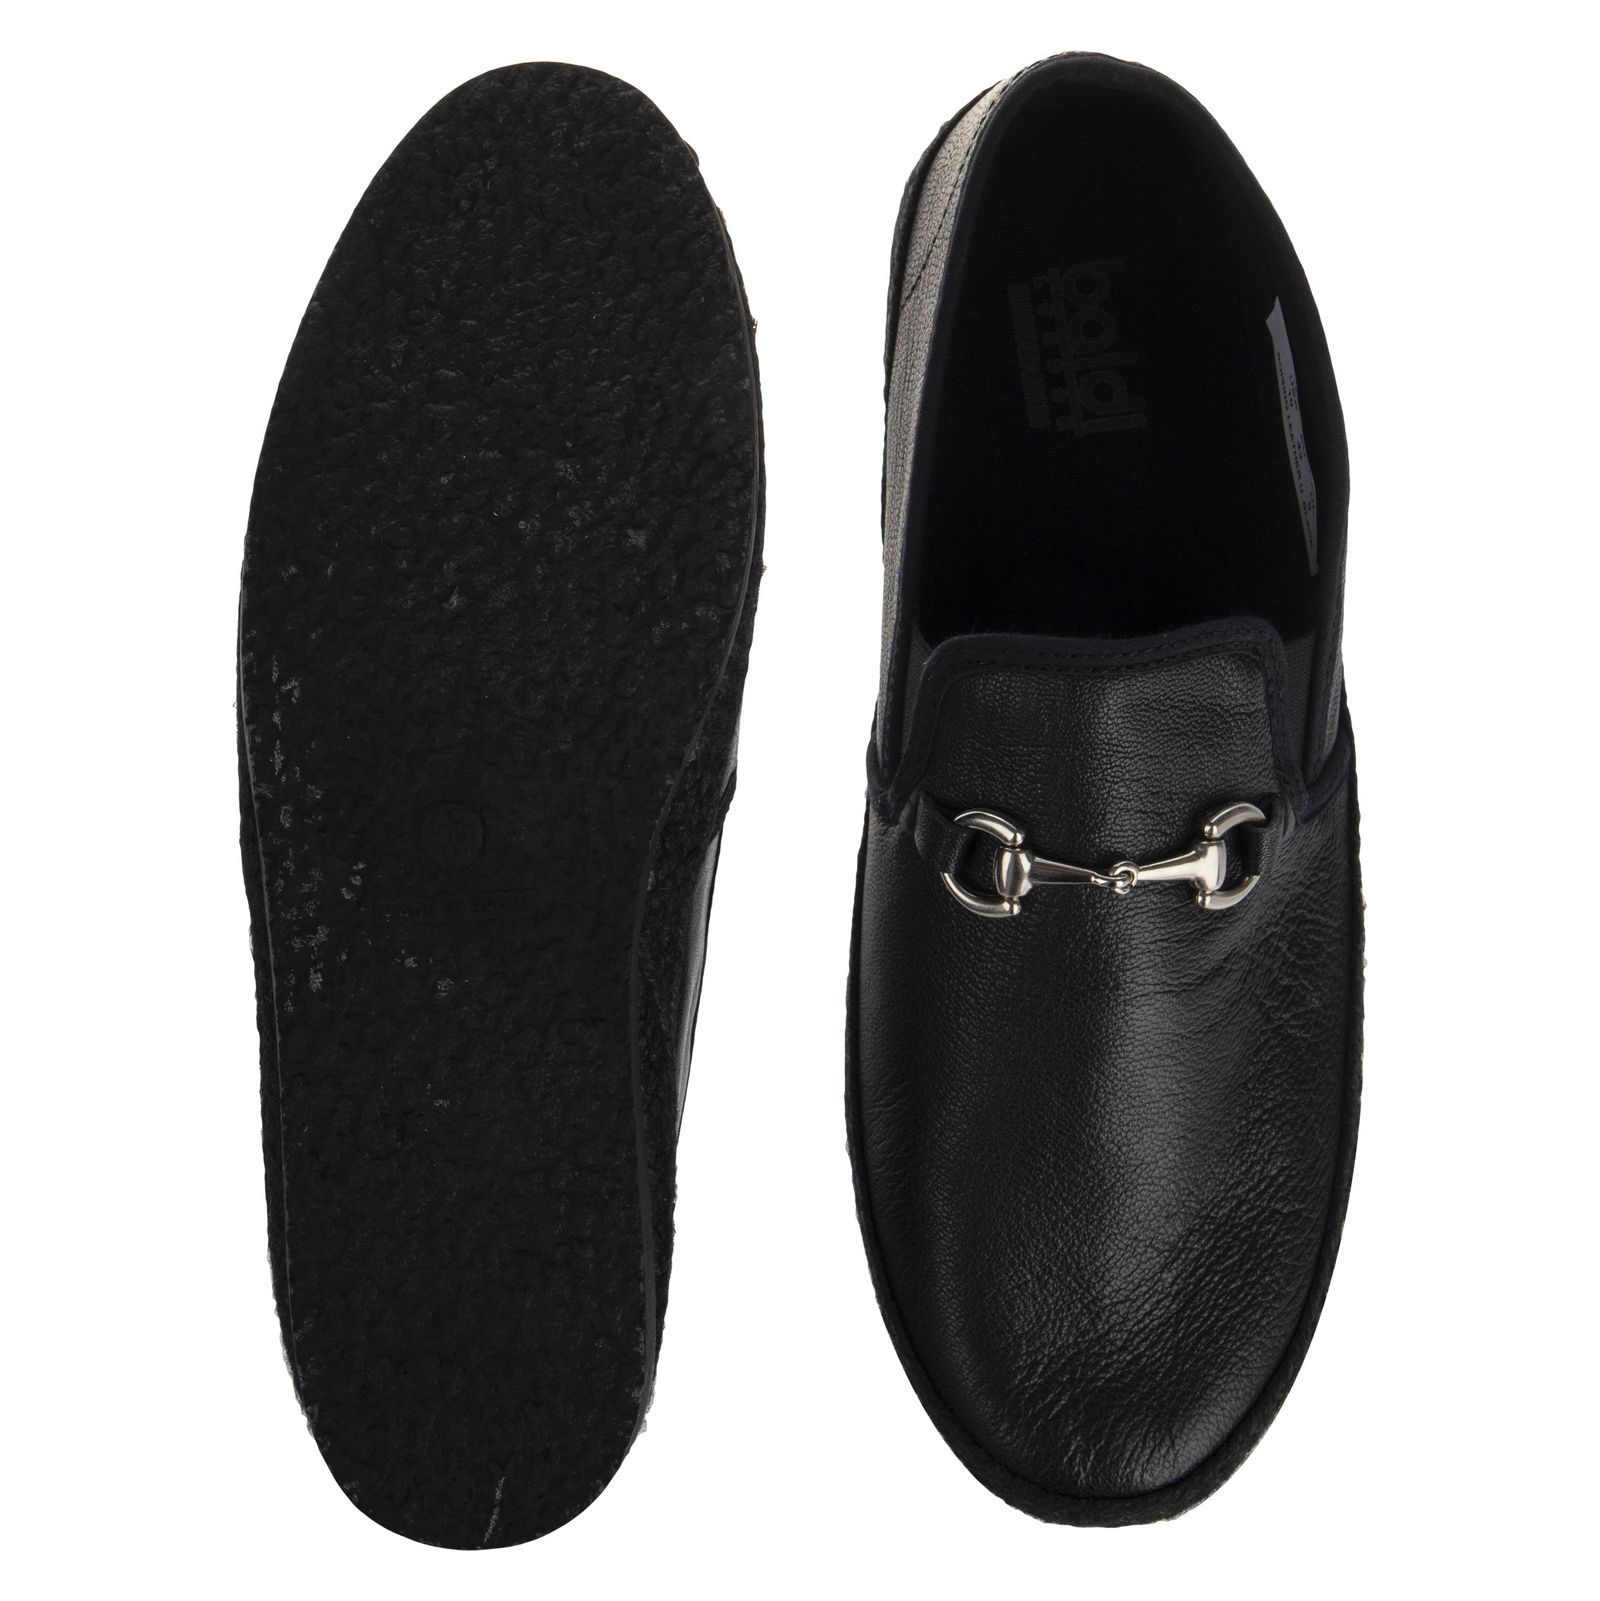 کفش روزمره مردانه بالدی مدل Boising leather -  - 3